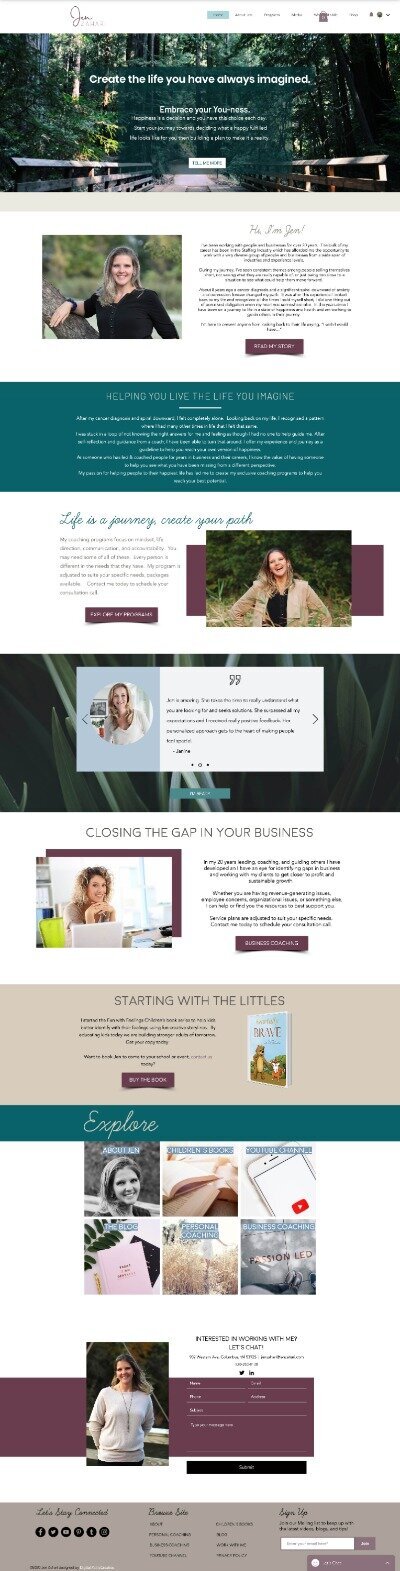 business coach website design